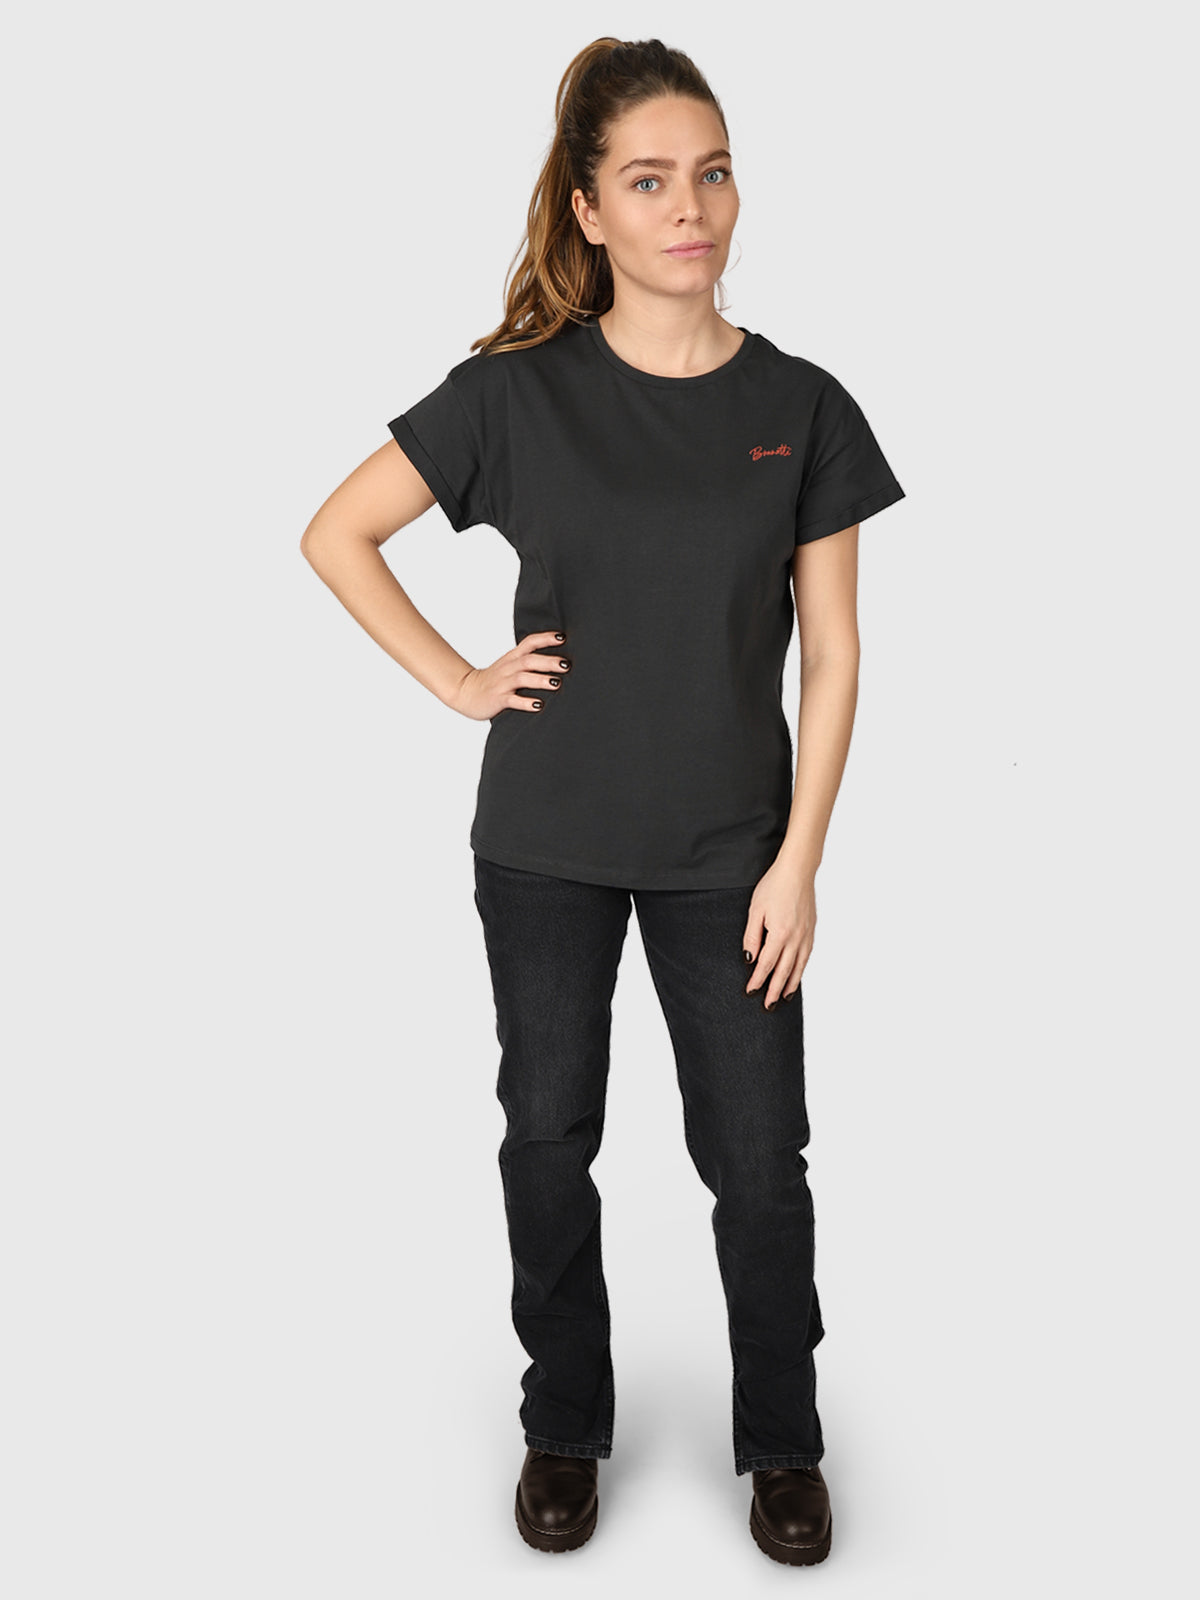 Samillia-R Women T-shirt | Black